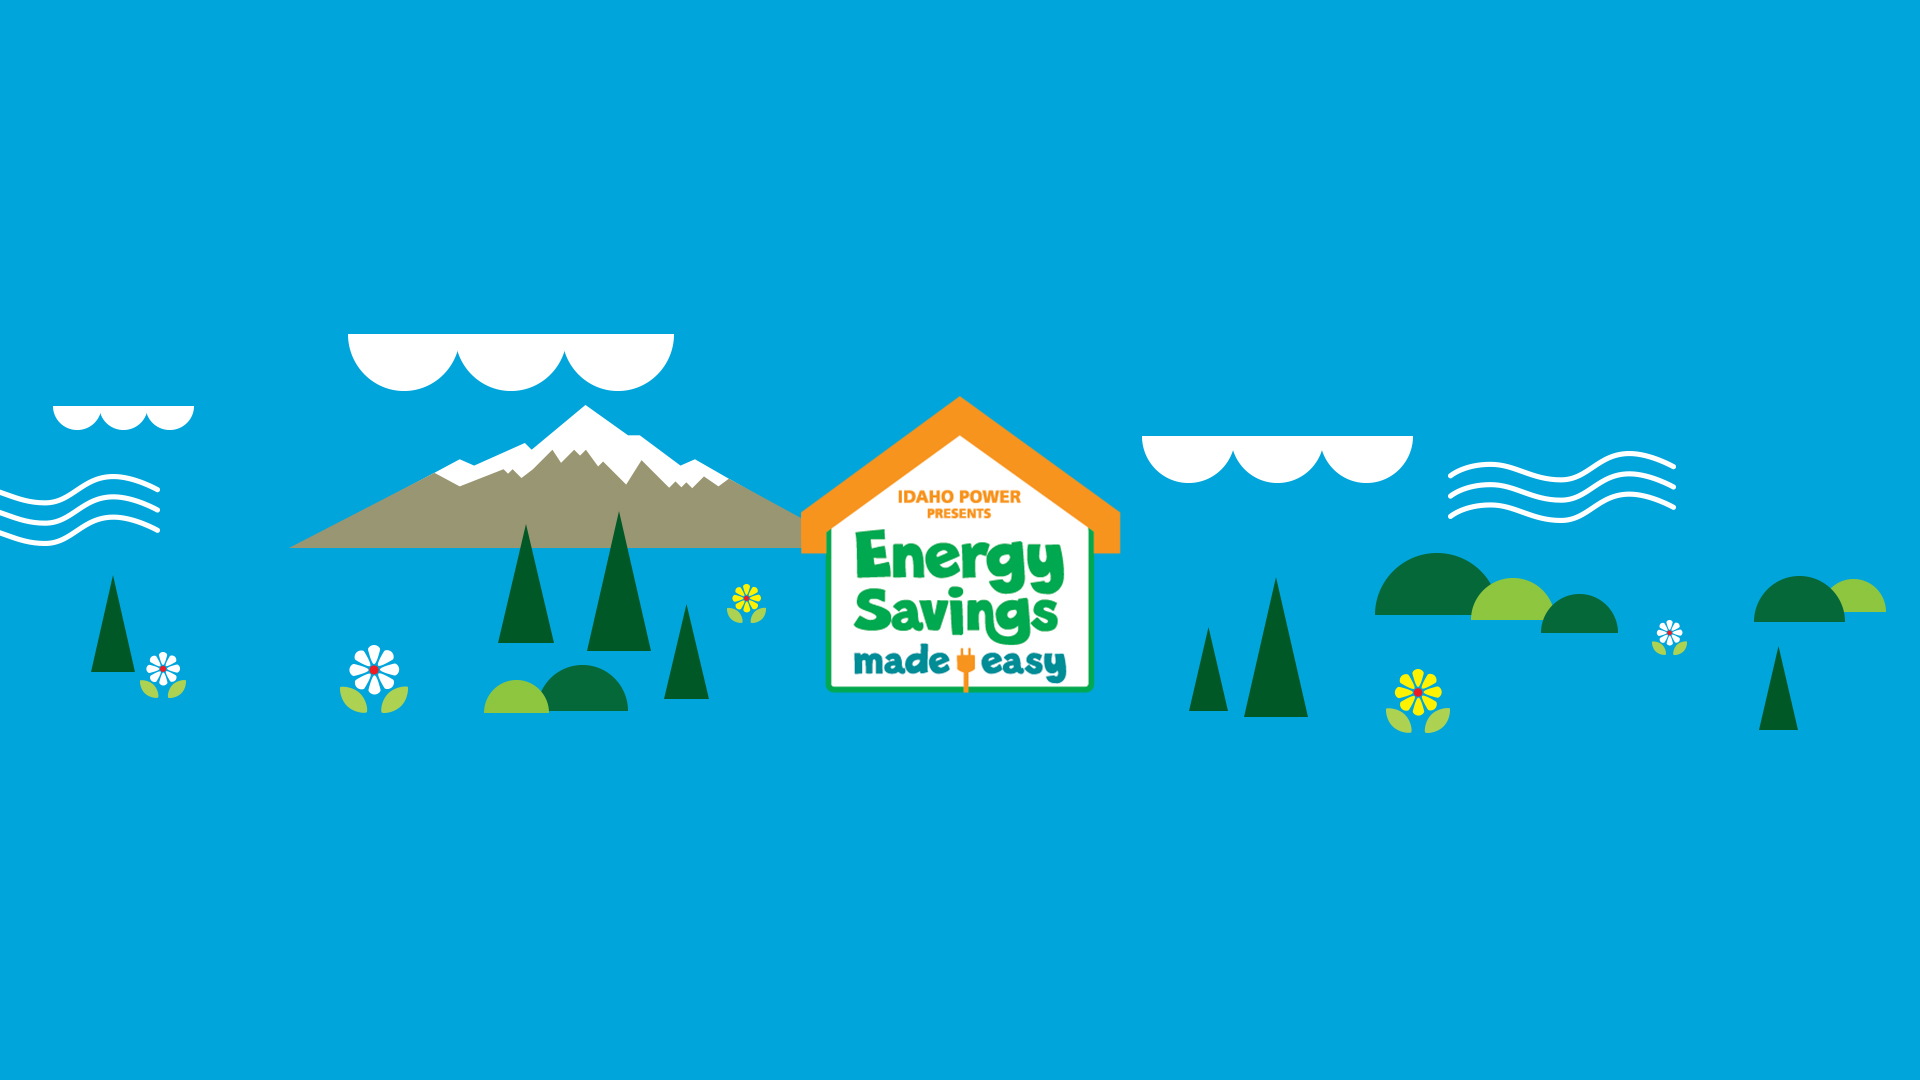 Idaho Power Presents Energy Savings Made Easy - Energy Saving - HD Wallpaper 